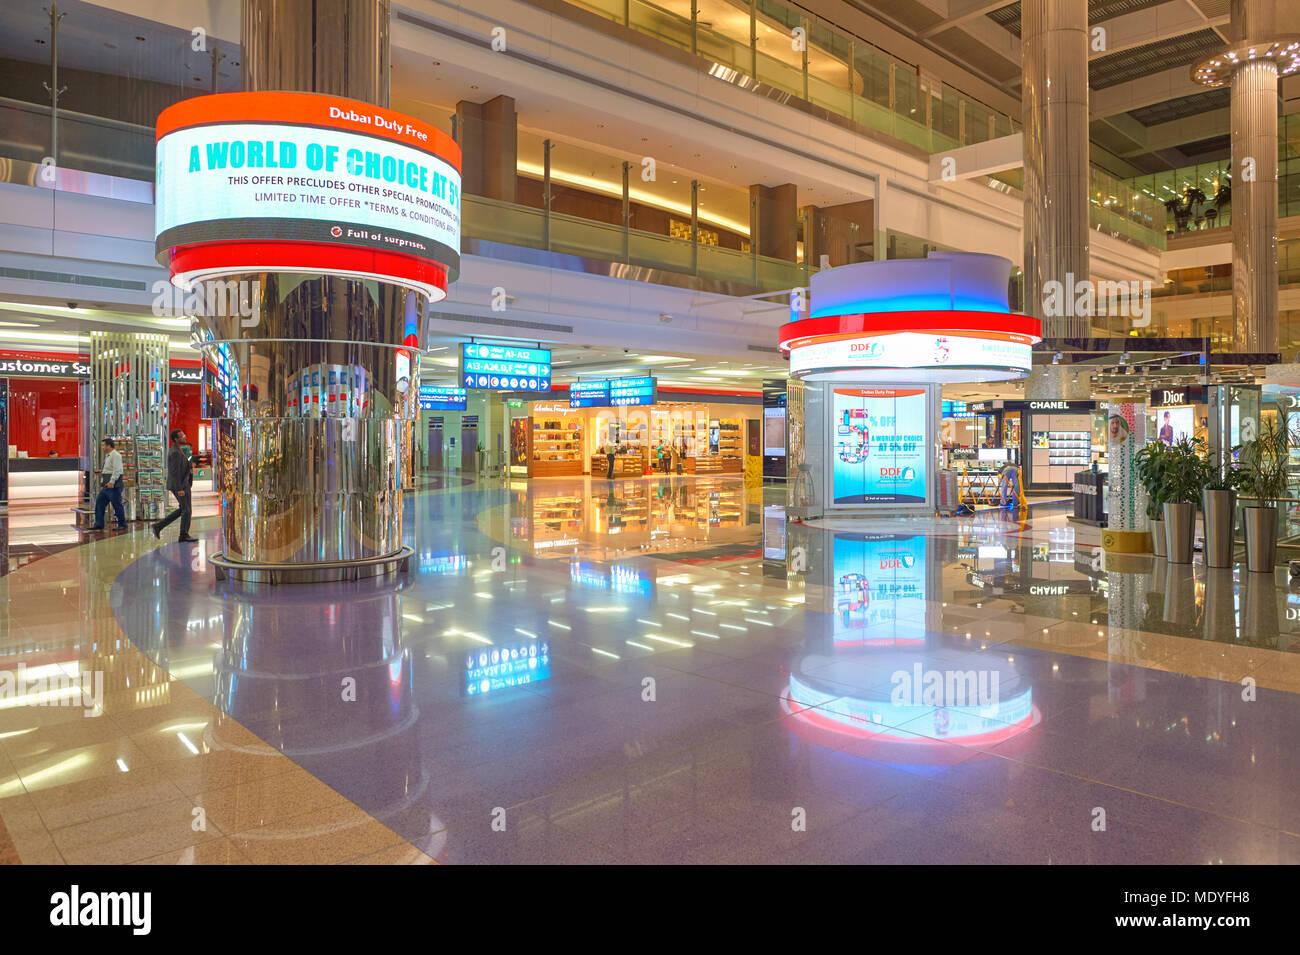 DUBAI, UAE - CIRCA NOVEMBER, 2015: inside Dubai International Airport. It is the world's busiest airport by international passenger traffic. Stock Photo